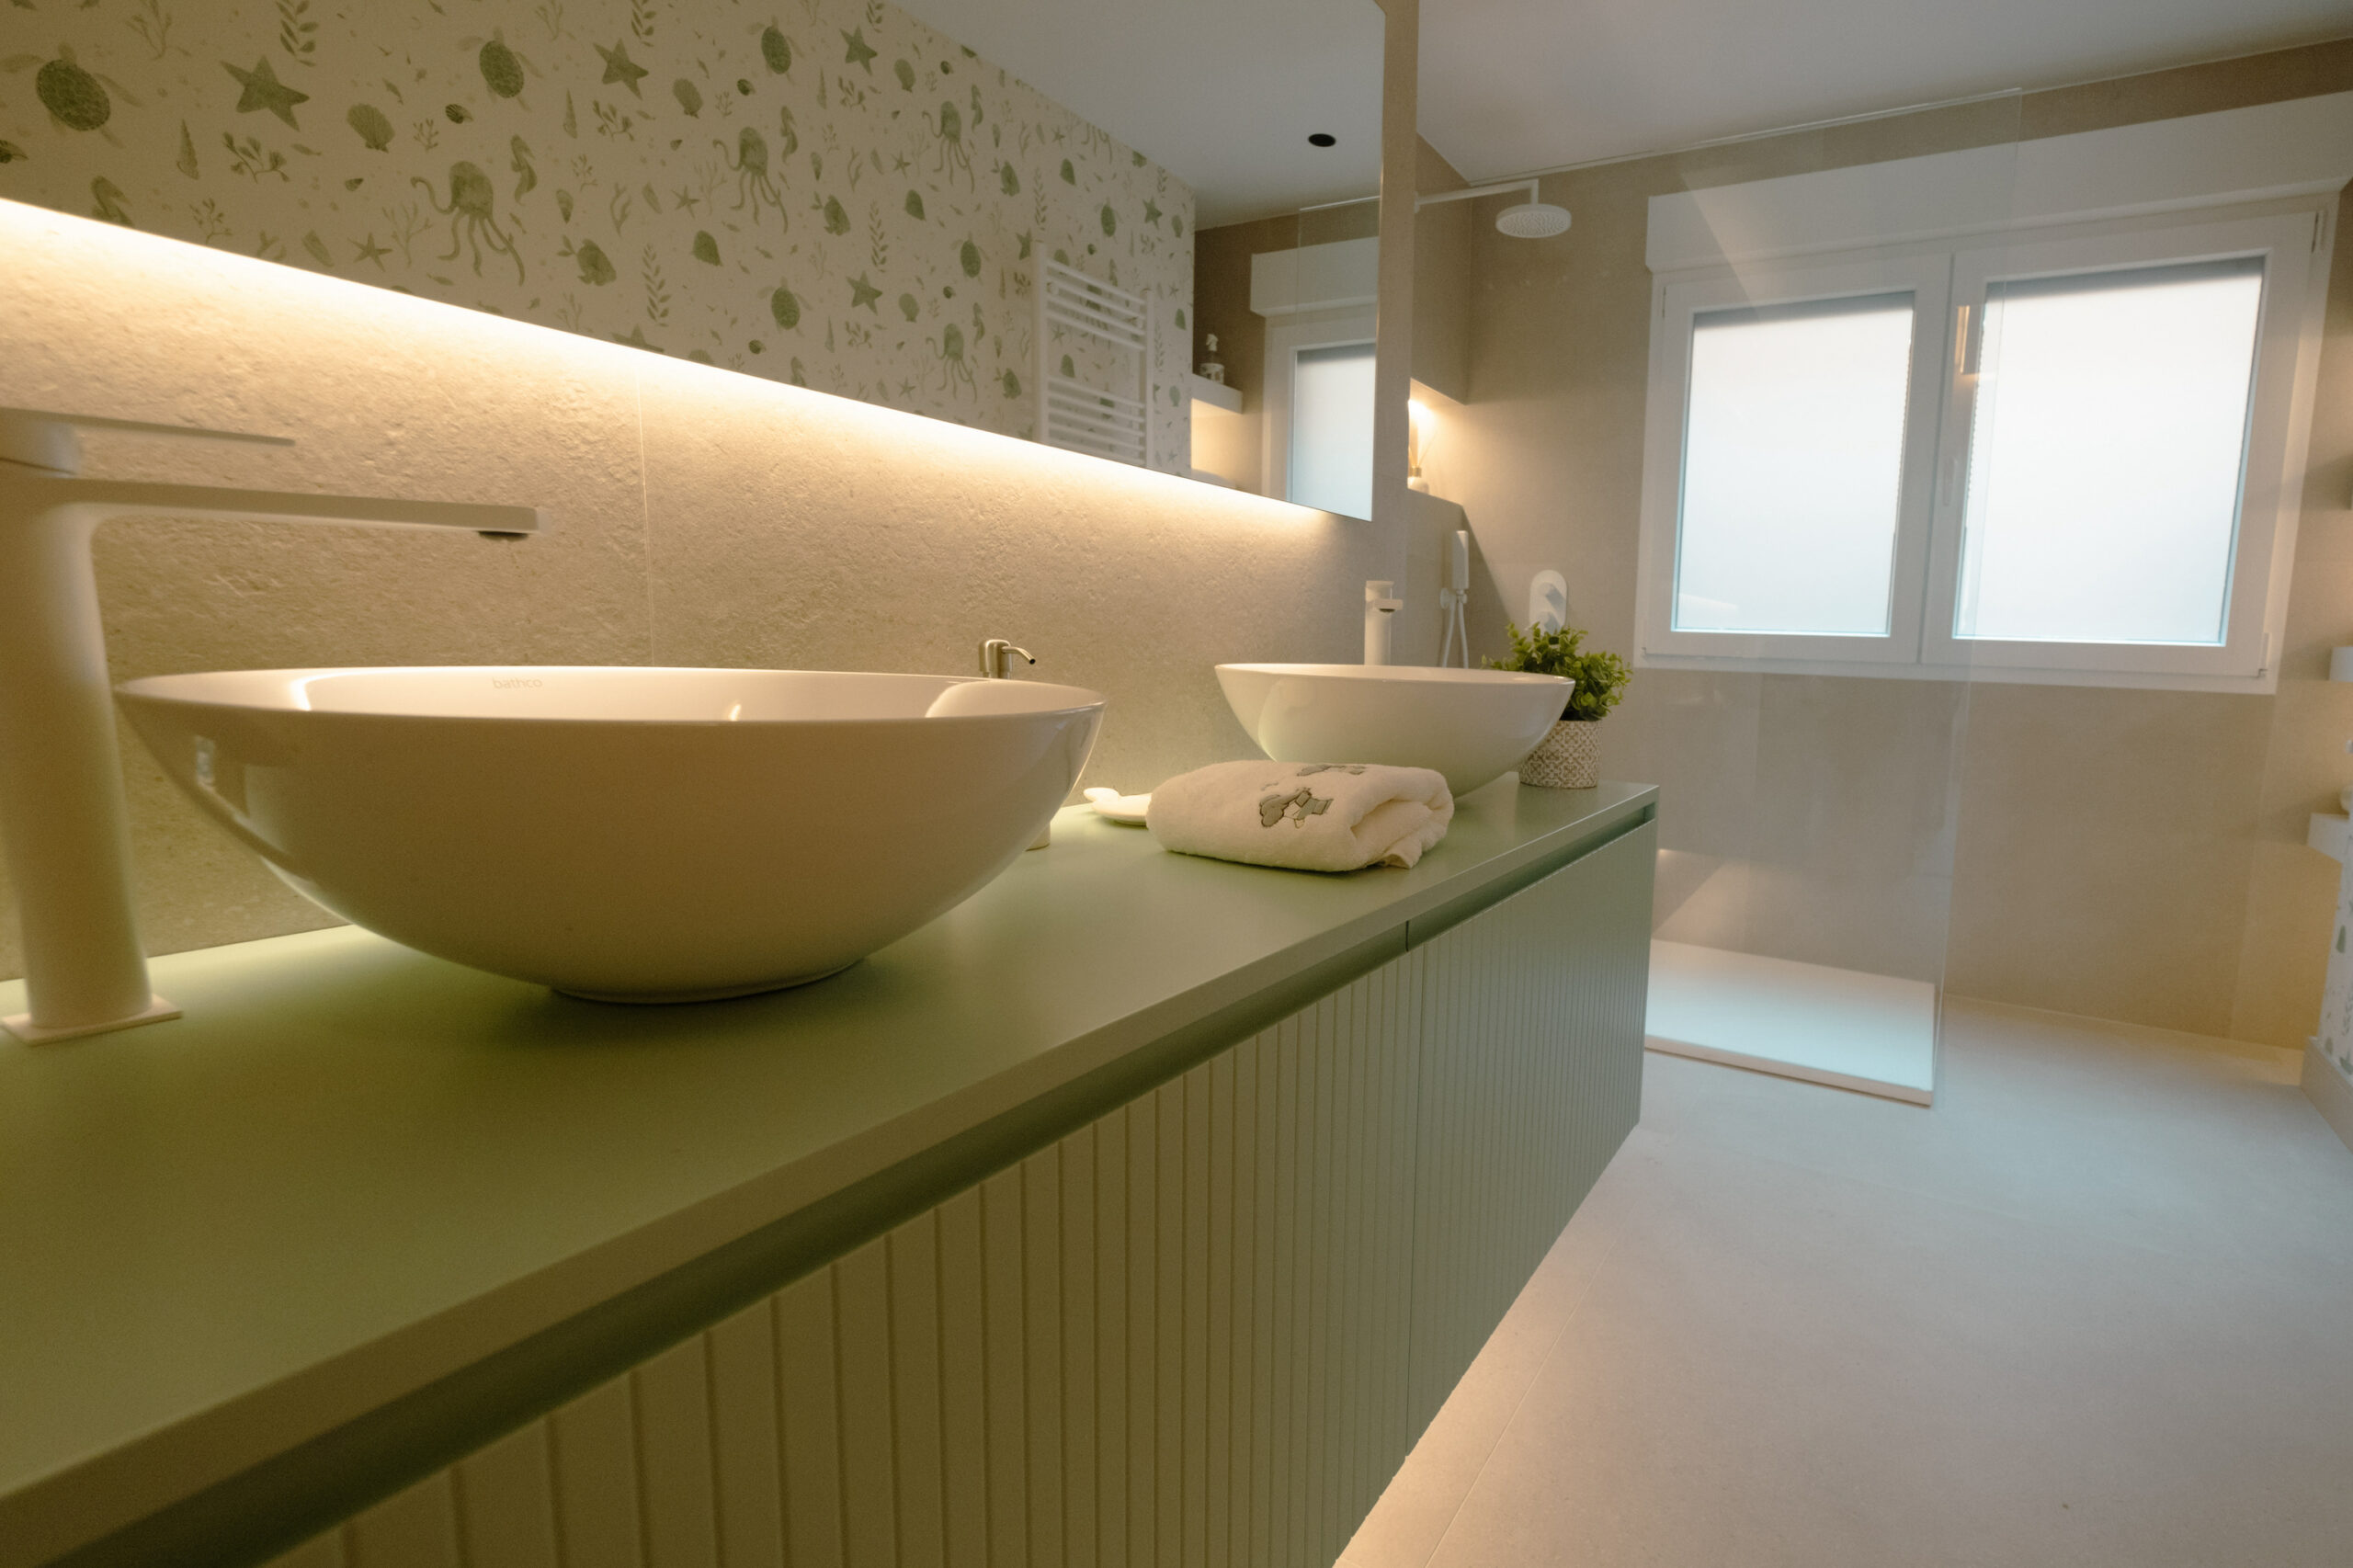 baño-moderno-en-verde-y-piedra-beige-johntelobusca-cjr